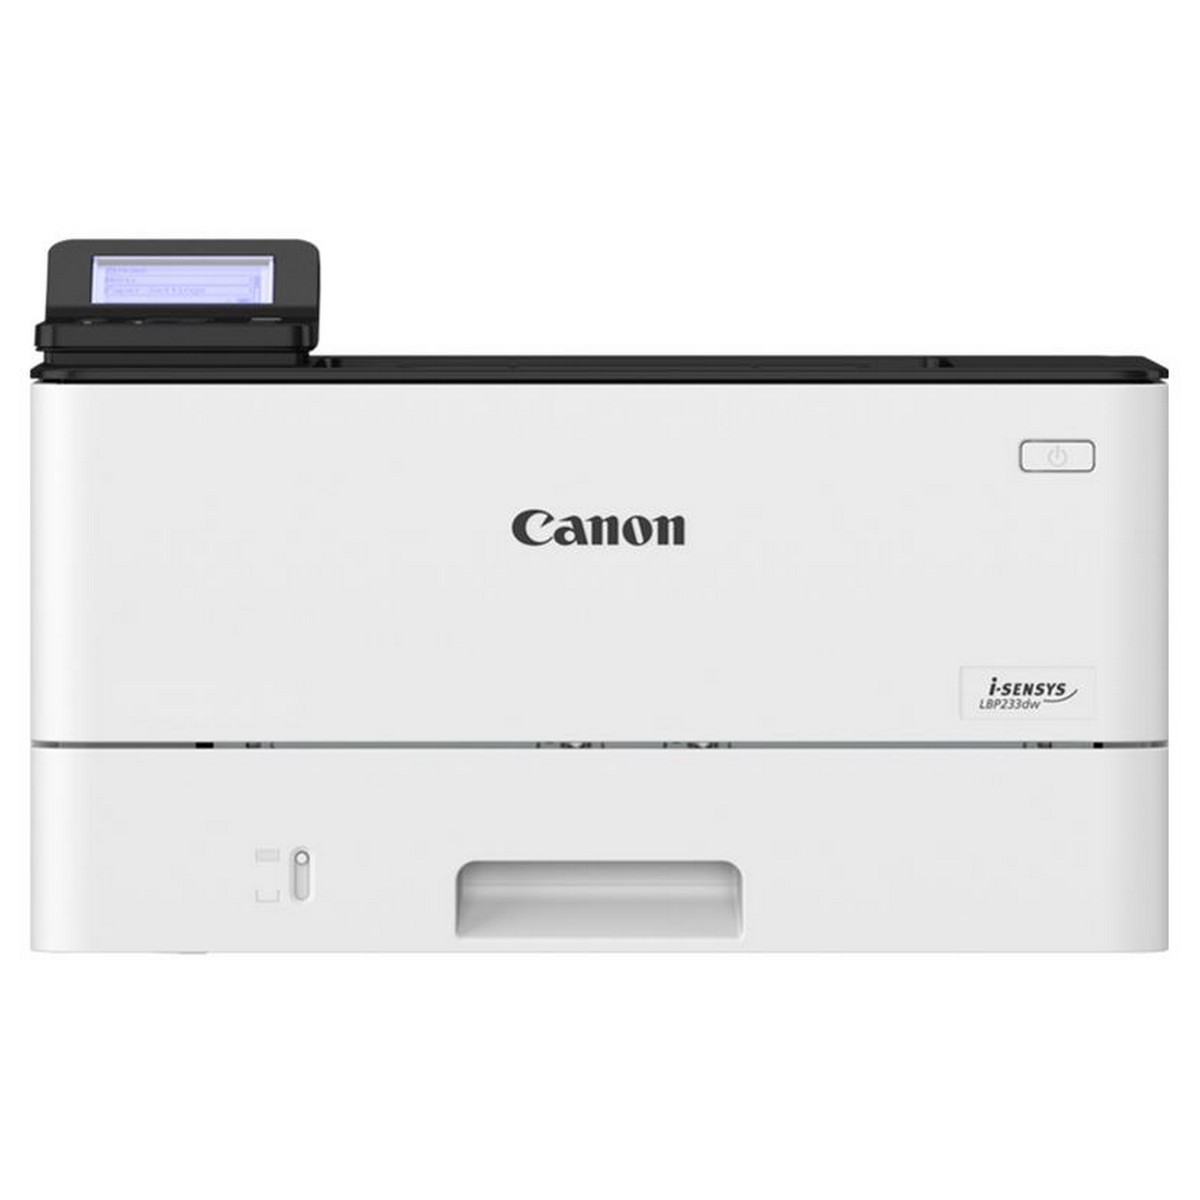 Принтер Canon i-SENSYS LBP233DW с Wi-Fi (5162C008)